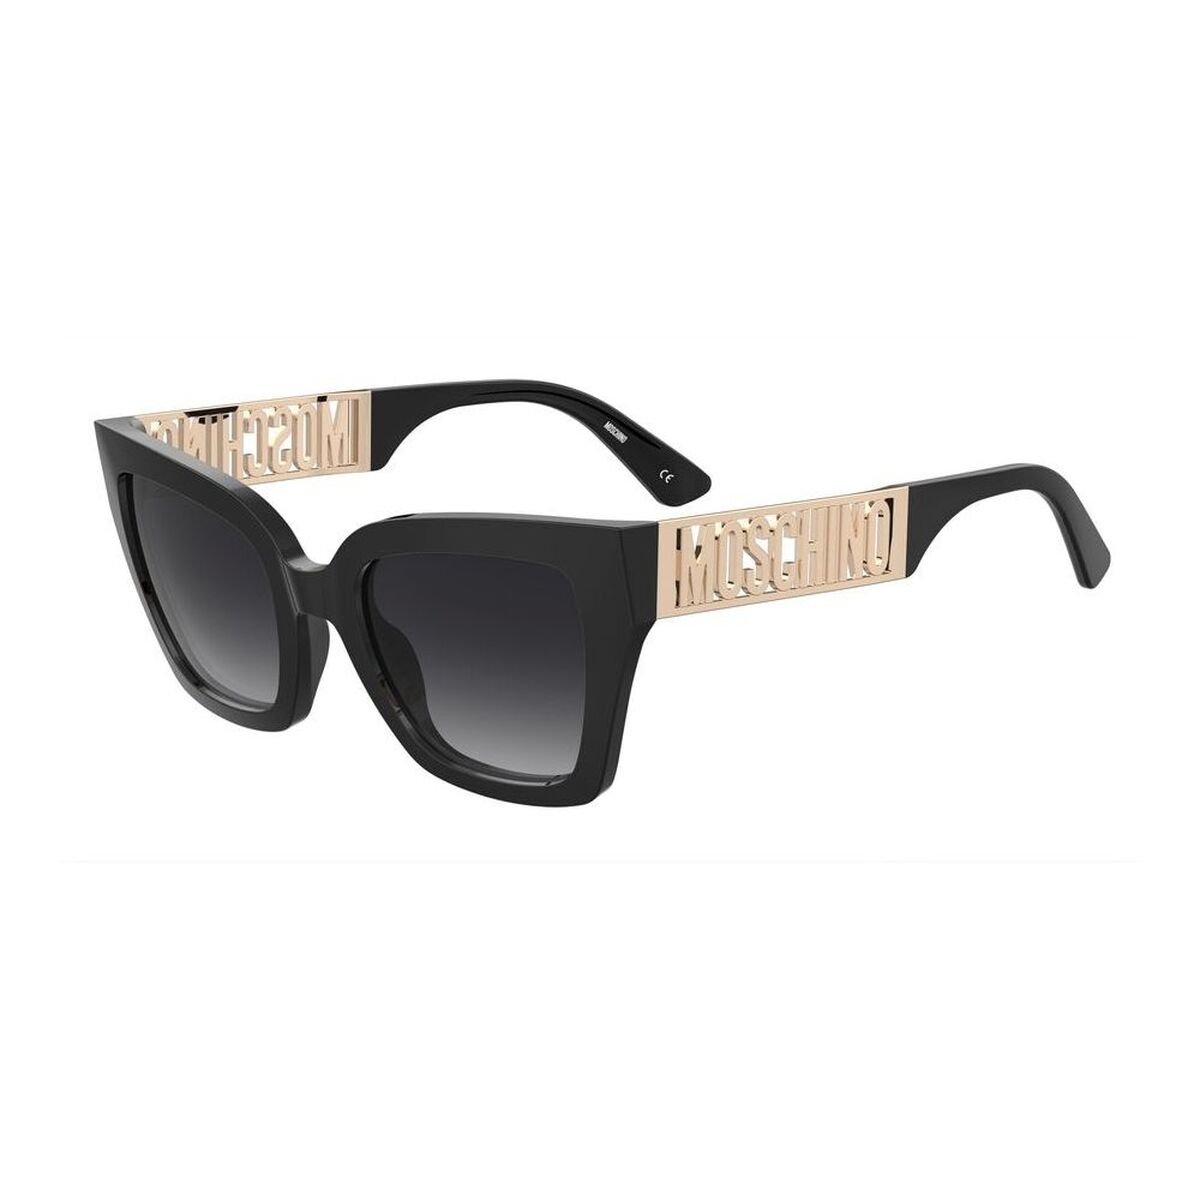 Kaufe Damensonnenbrille Moschino MOS161_S bei AWK Flagship um € 232.00